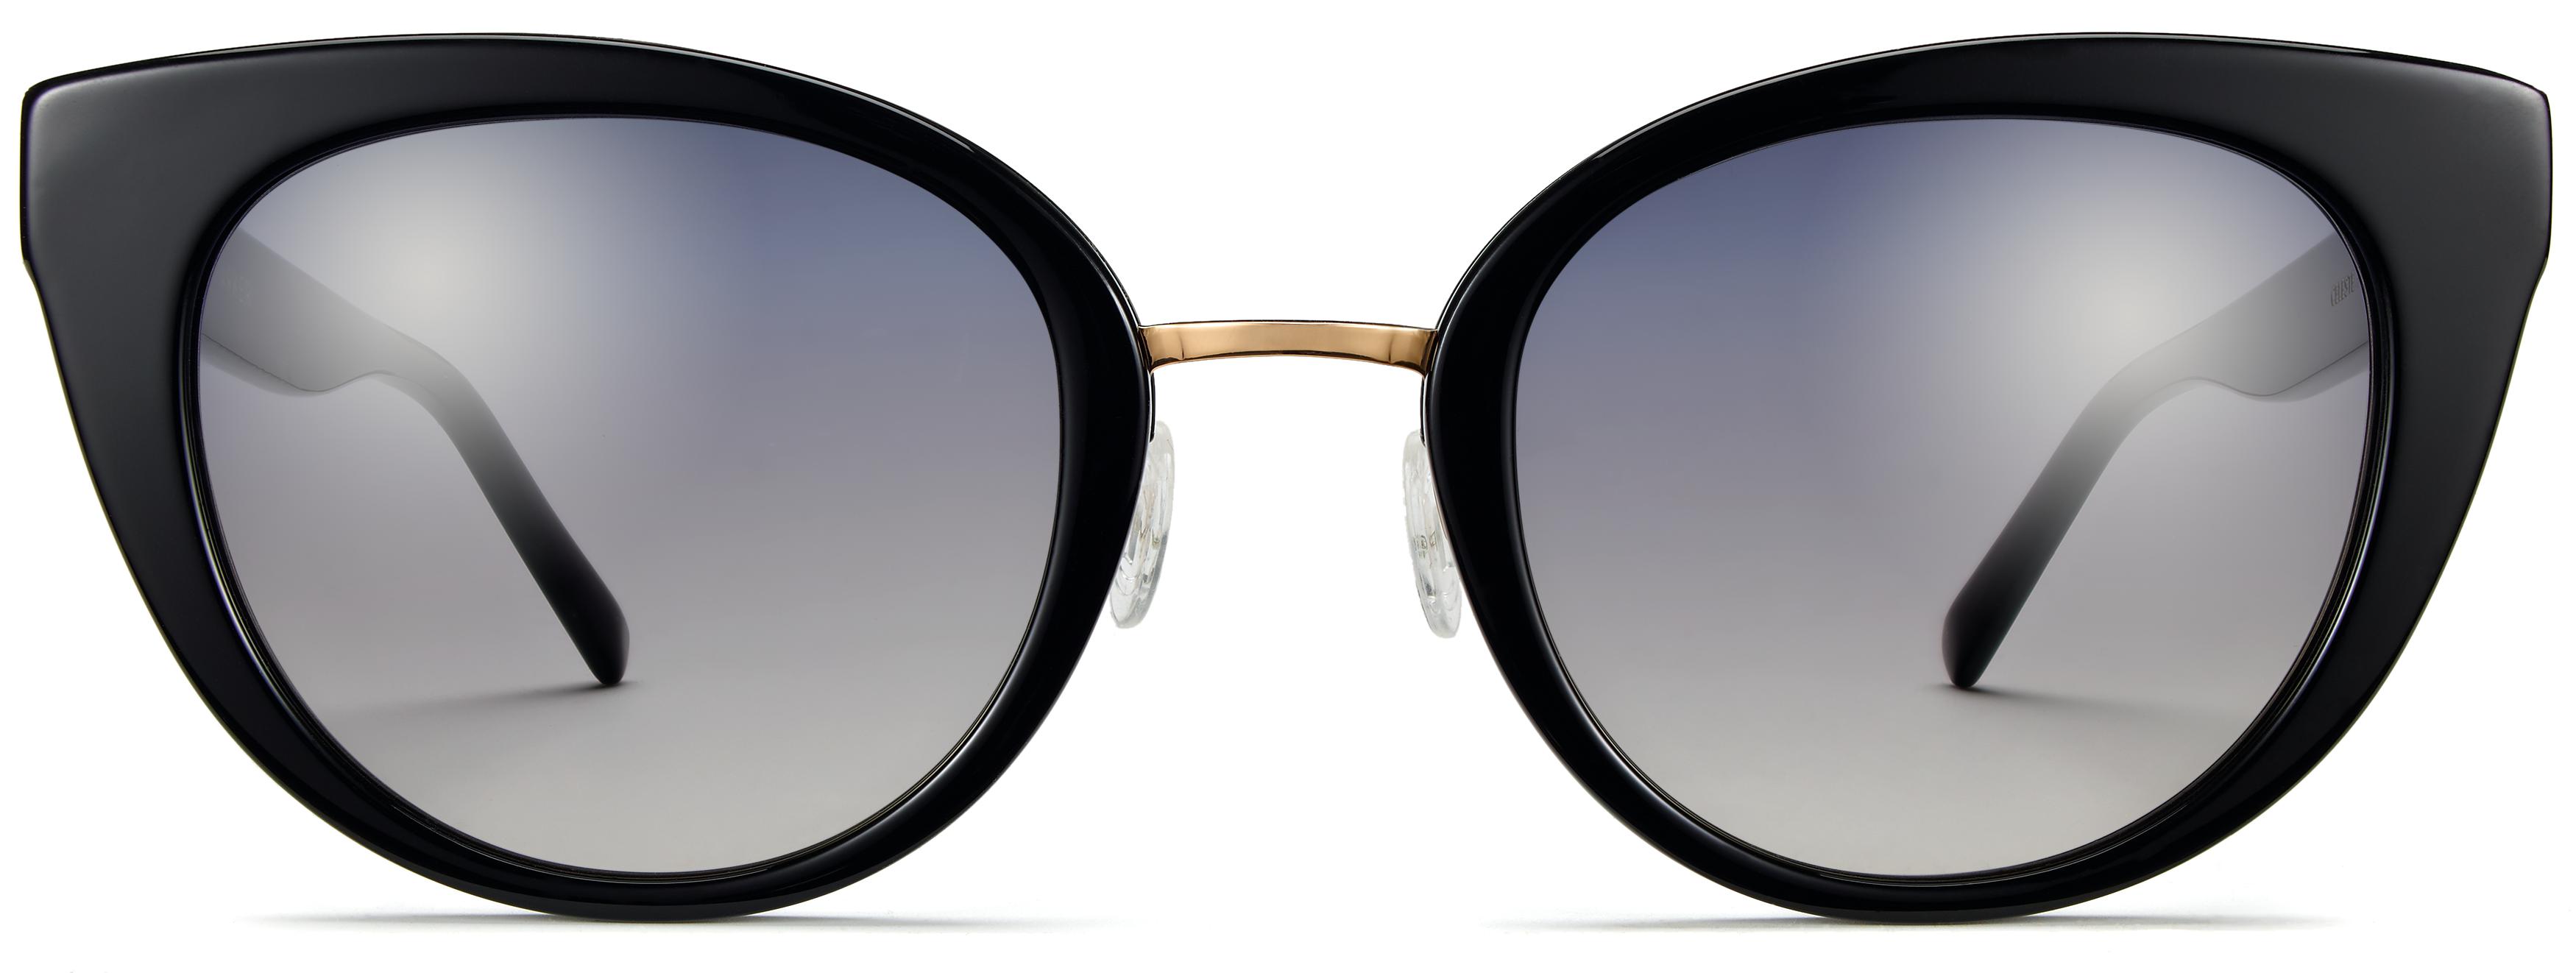 Celeste Sunglasses in Jet Black with Polished Gold | Warby Parker